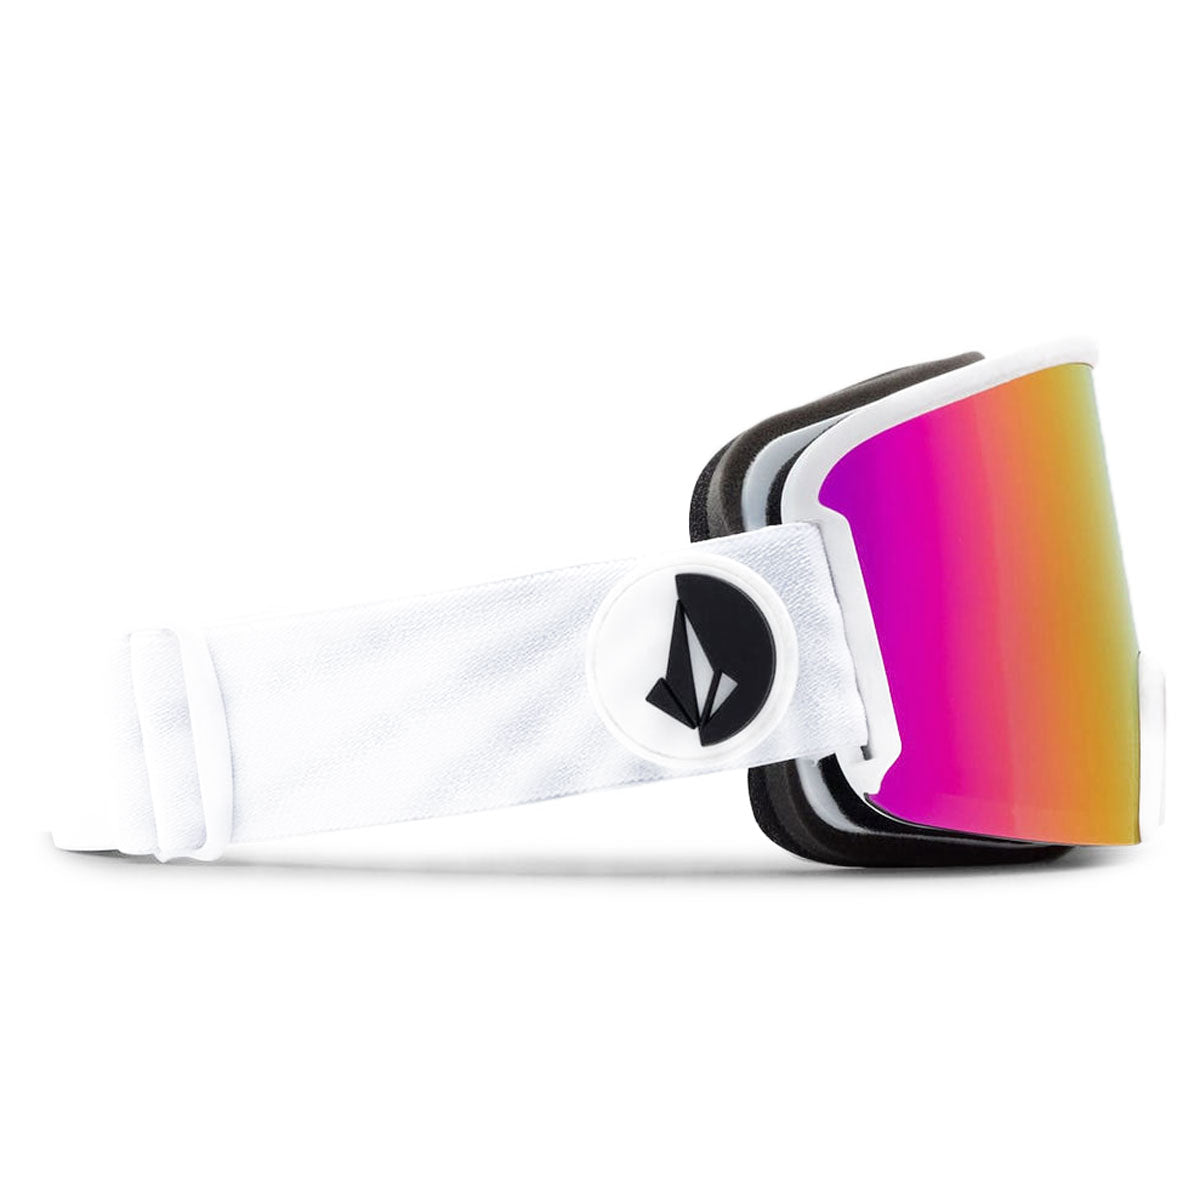 Volcom Garden Snowboard Goggles - Matte White/Pink Chrome image 2